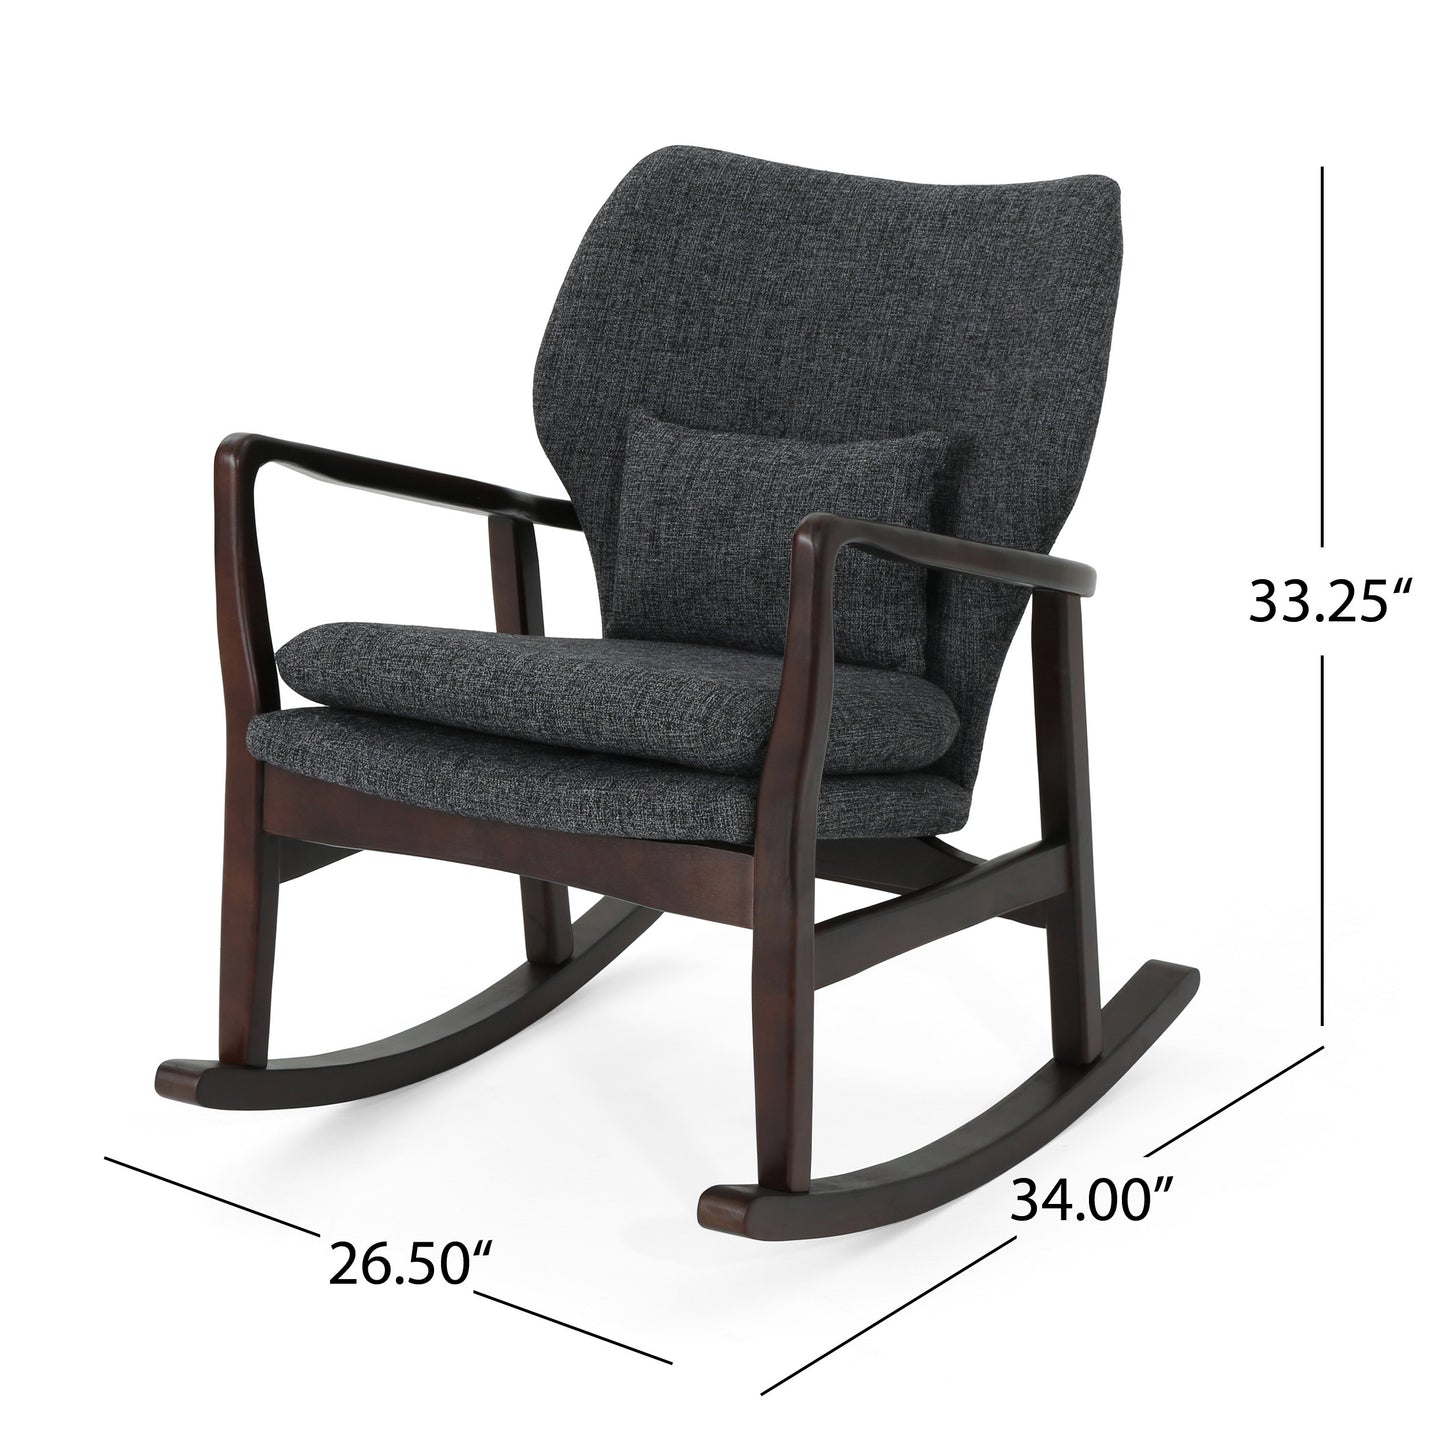 Balen Mid Century Modern Upholstered Rocking Chair